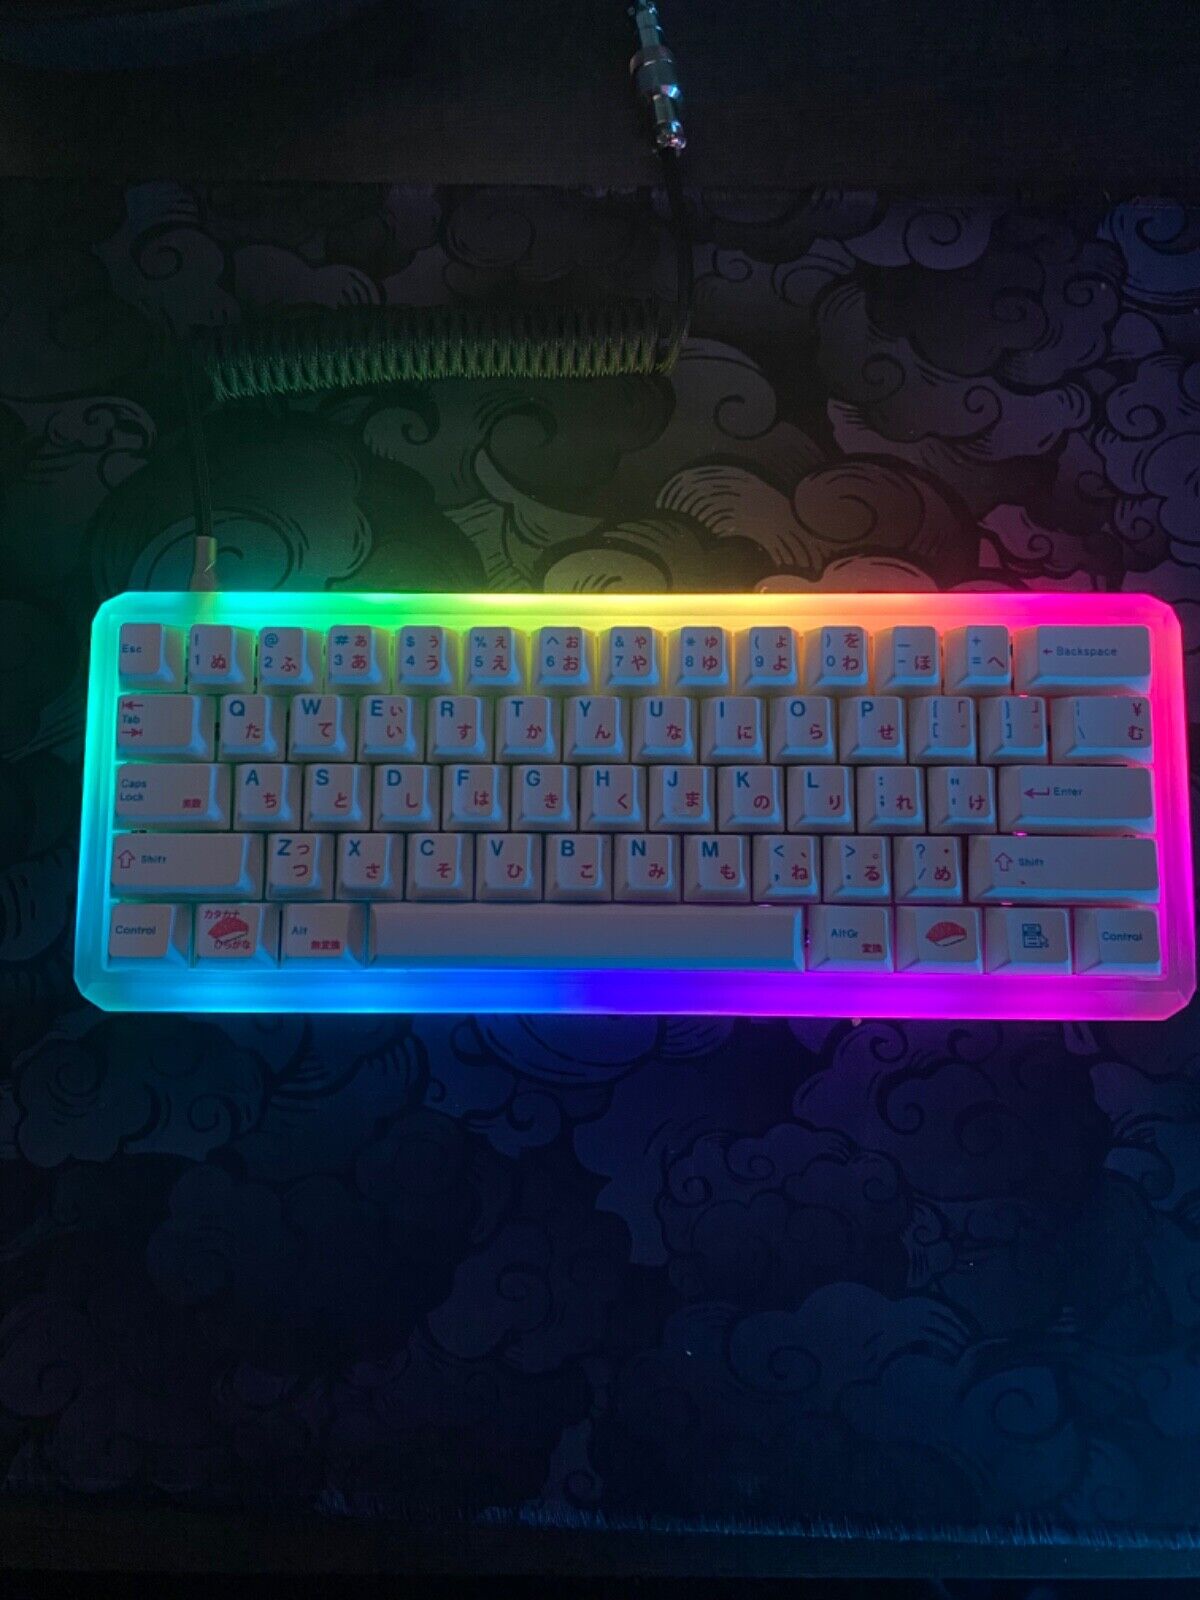 60% Custom Built RGB Keyboard, minimal use, MISSING DONGLE, 